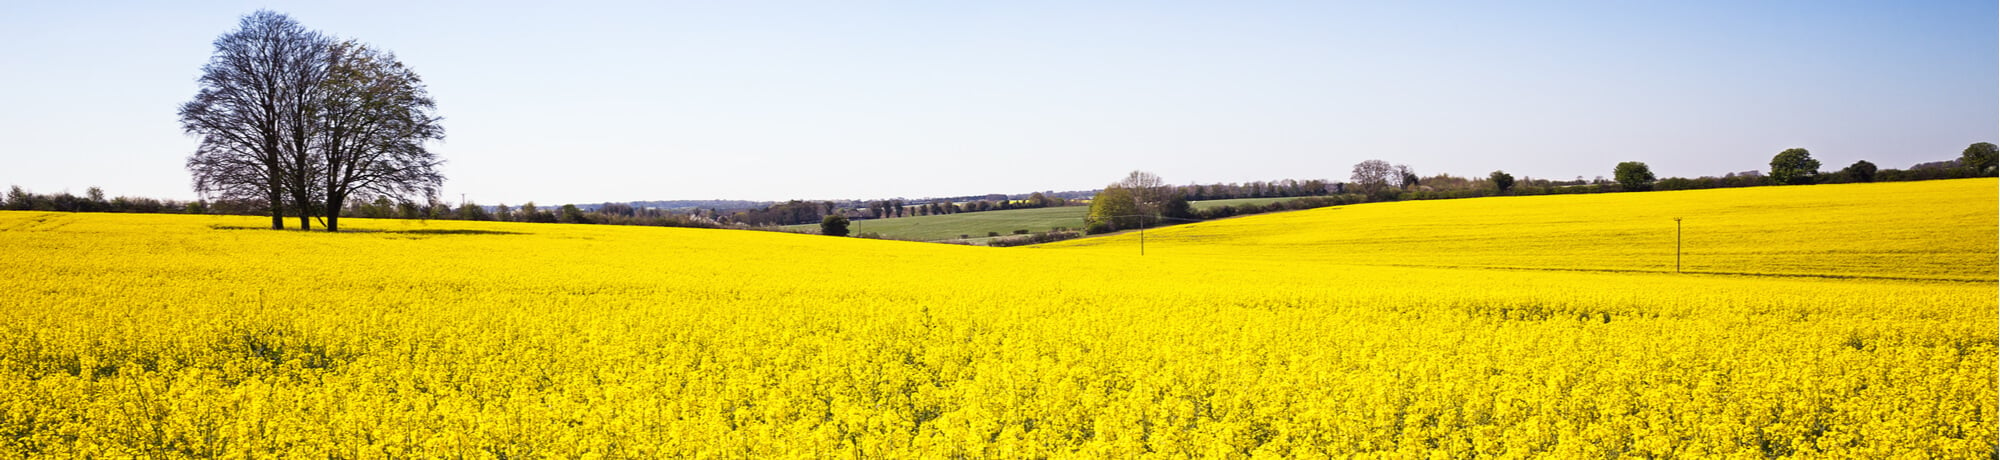 panorama-field-hampshire-yellow-rape-canola-flowers